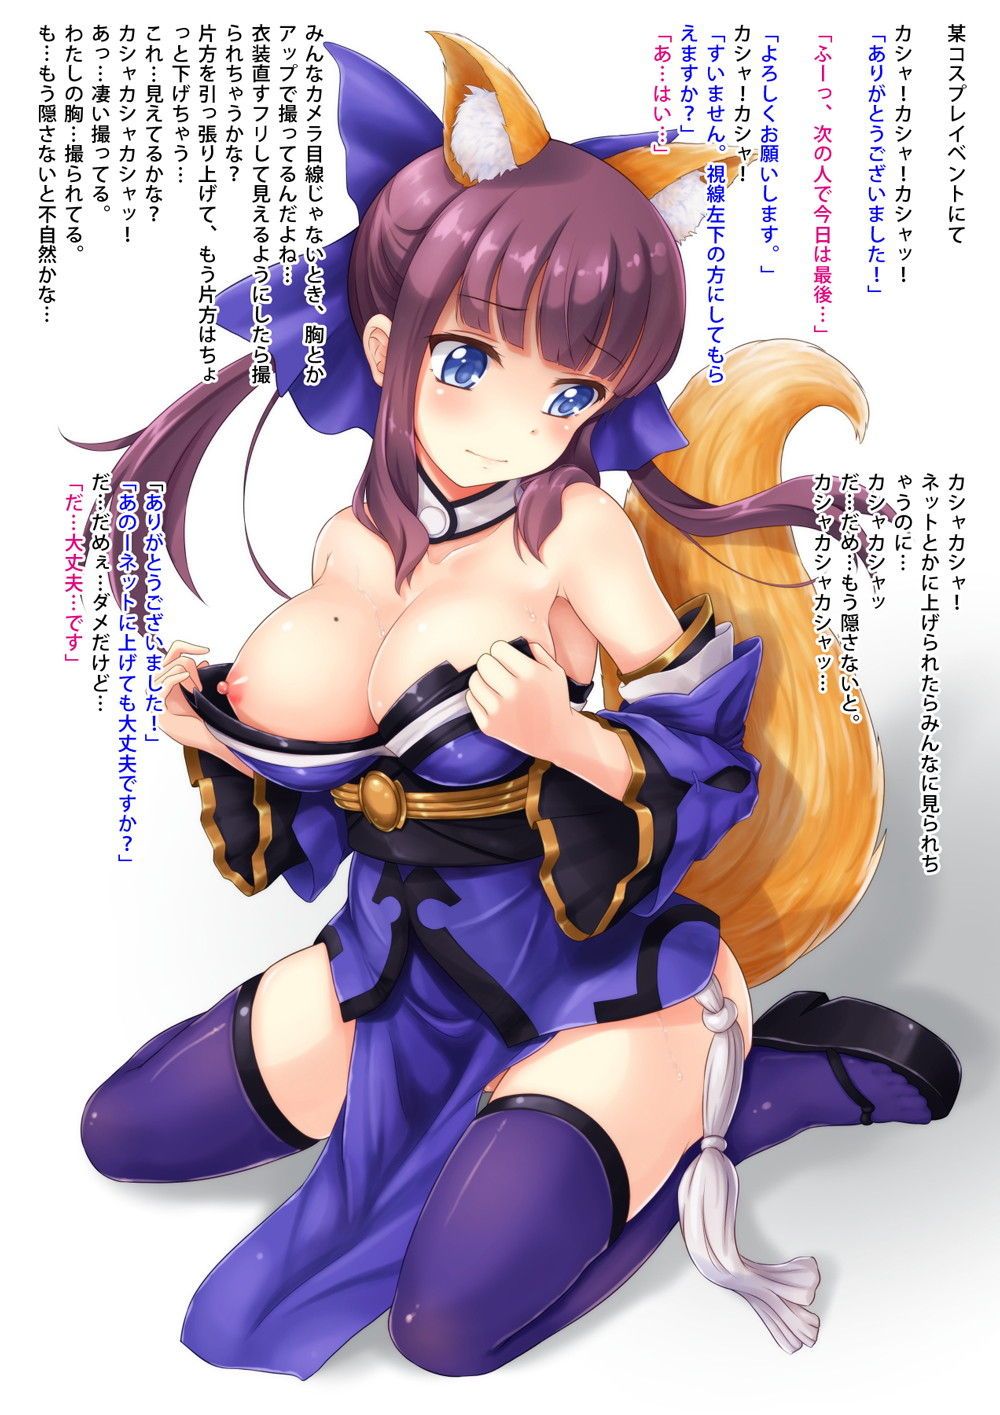 [Erotic image] NEW GAME! Unried Nuki secondary erotic image that makes you want to do H like Hifuki Takimoto manga 5